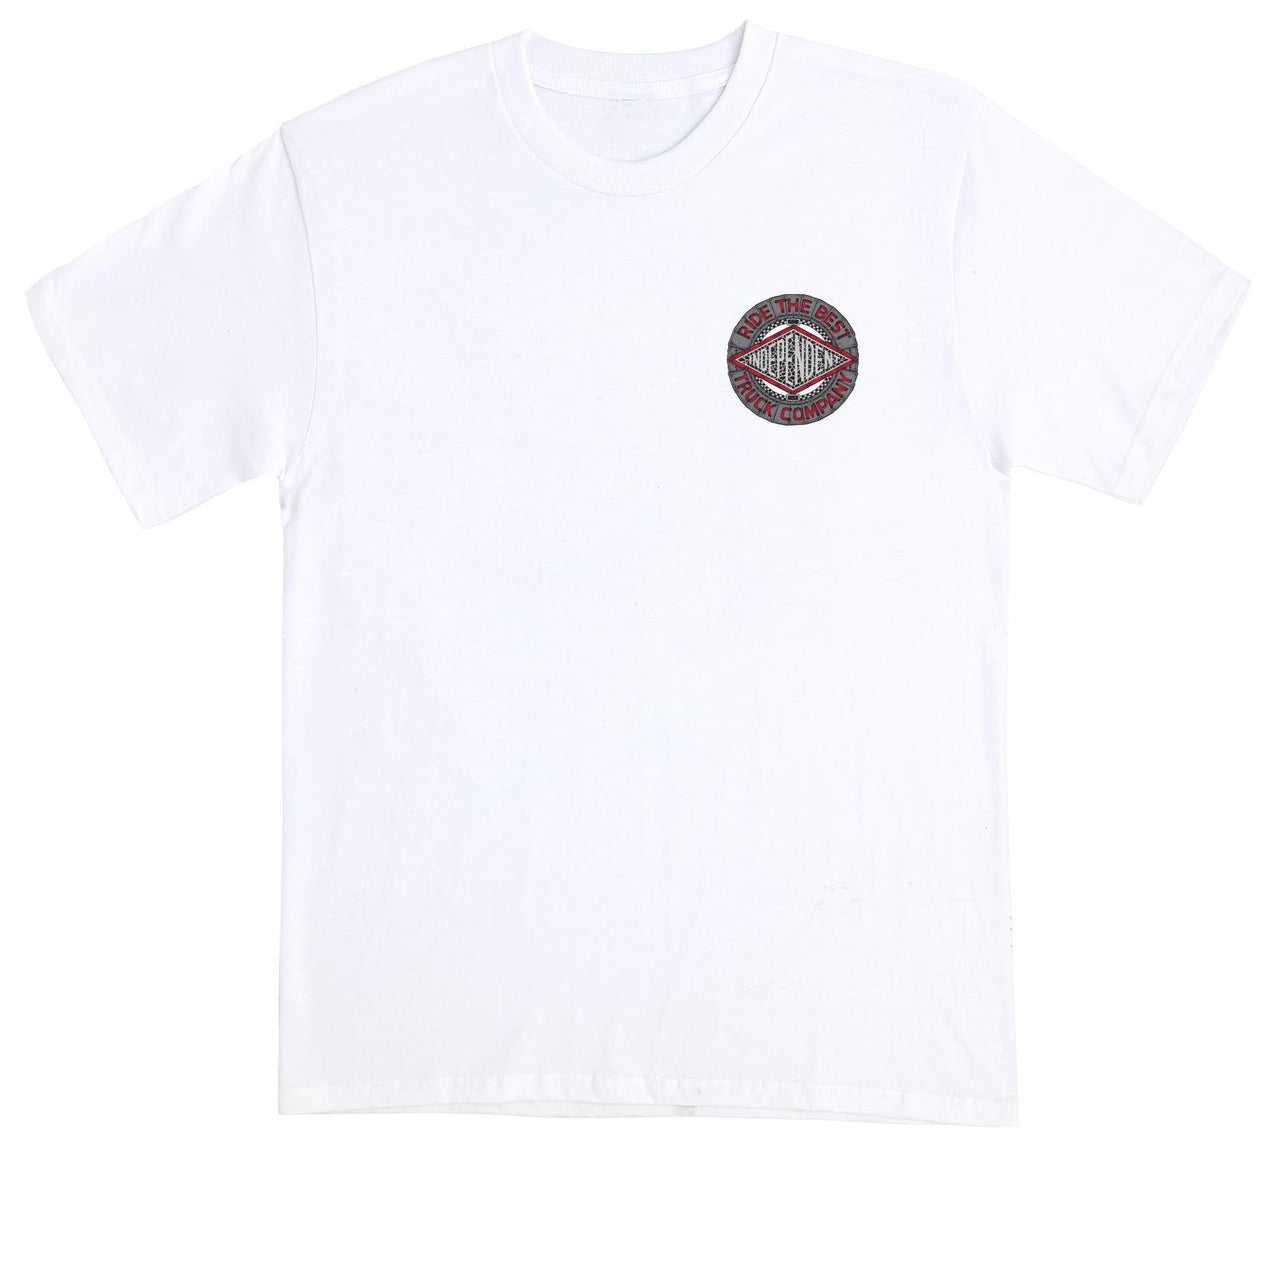 Independent Mako Tile Summit T-Shirt - White image 2